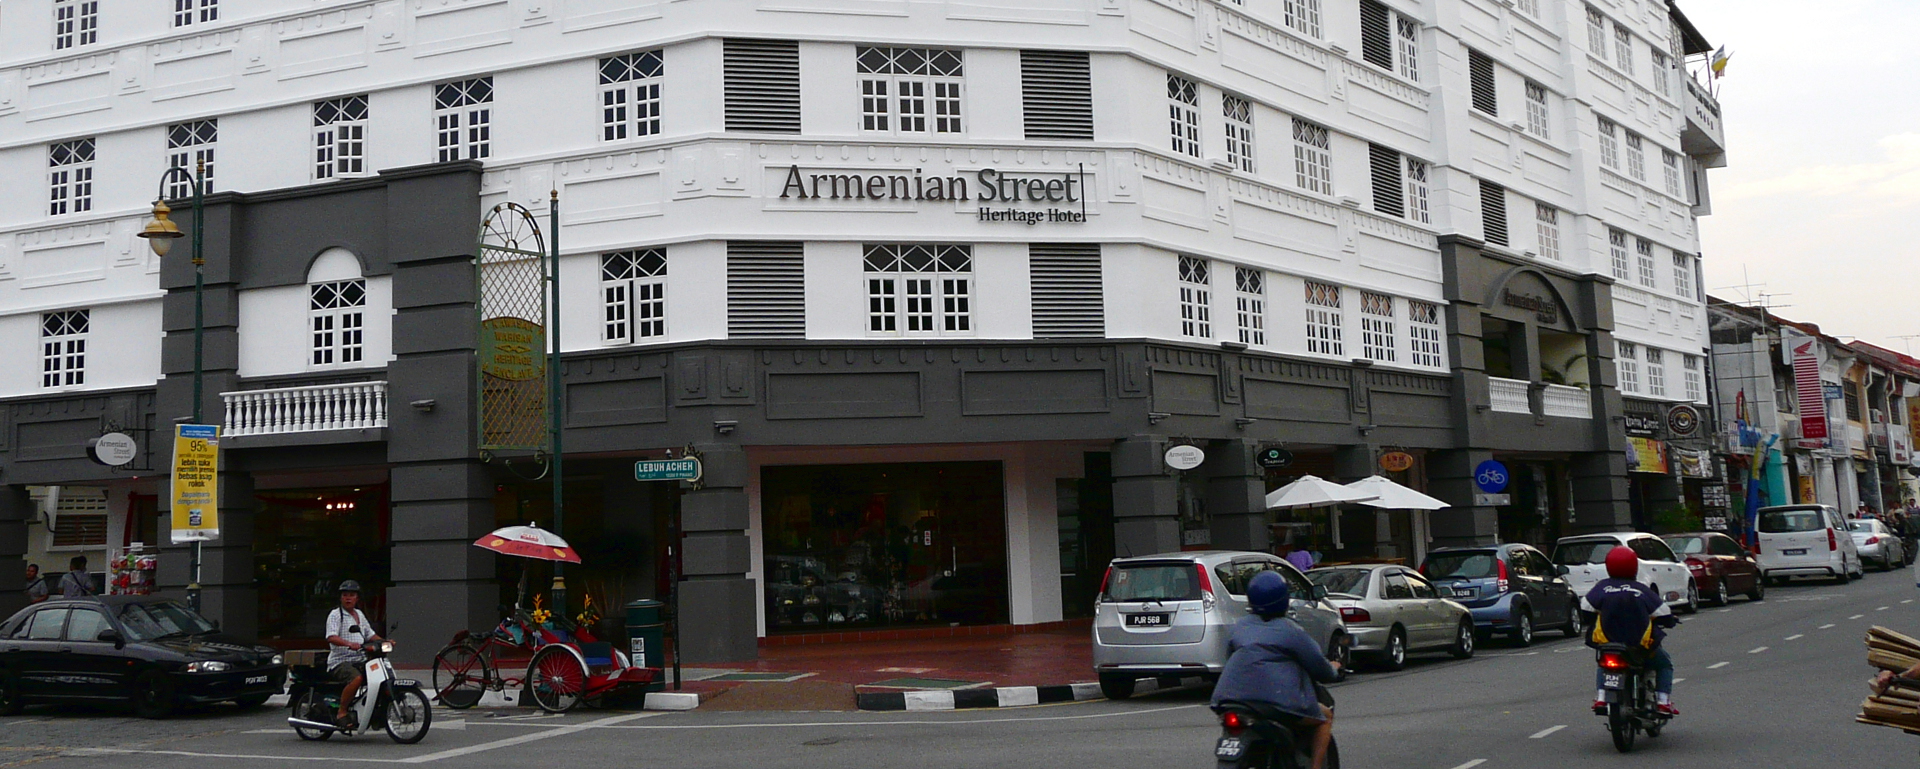 Hotel heritage armenian street Armenian Street